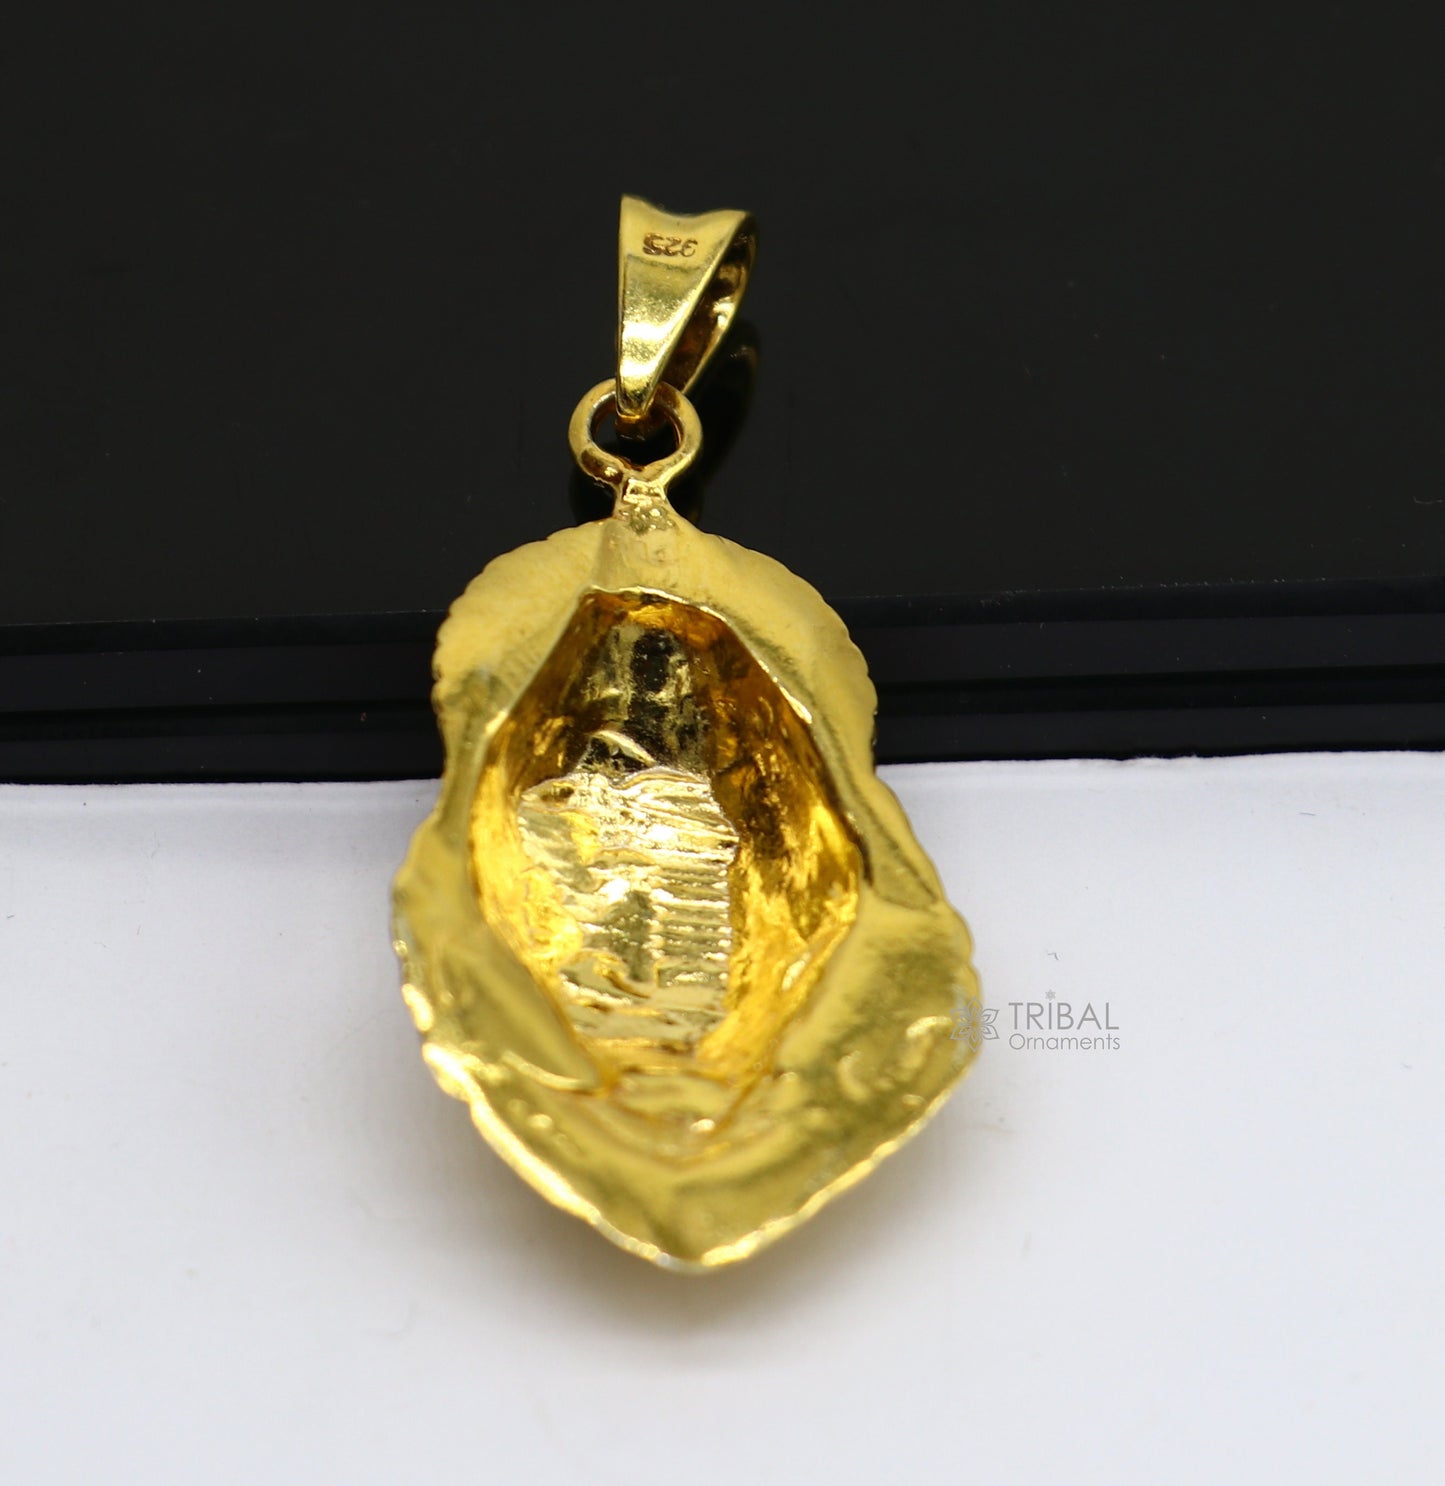 925 fine pure silver idol God Vishnu Narsimha pendant, stylish gold polished pendant, best gifting locket oxidized pendant necklace nsp602 - TRIBAL ORNAMENTS